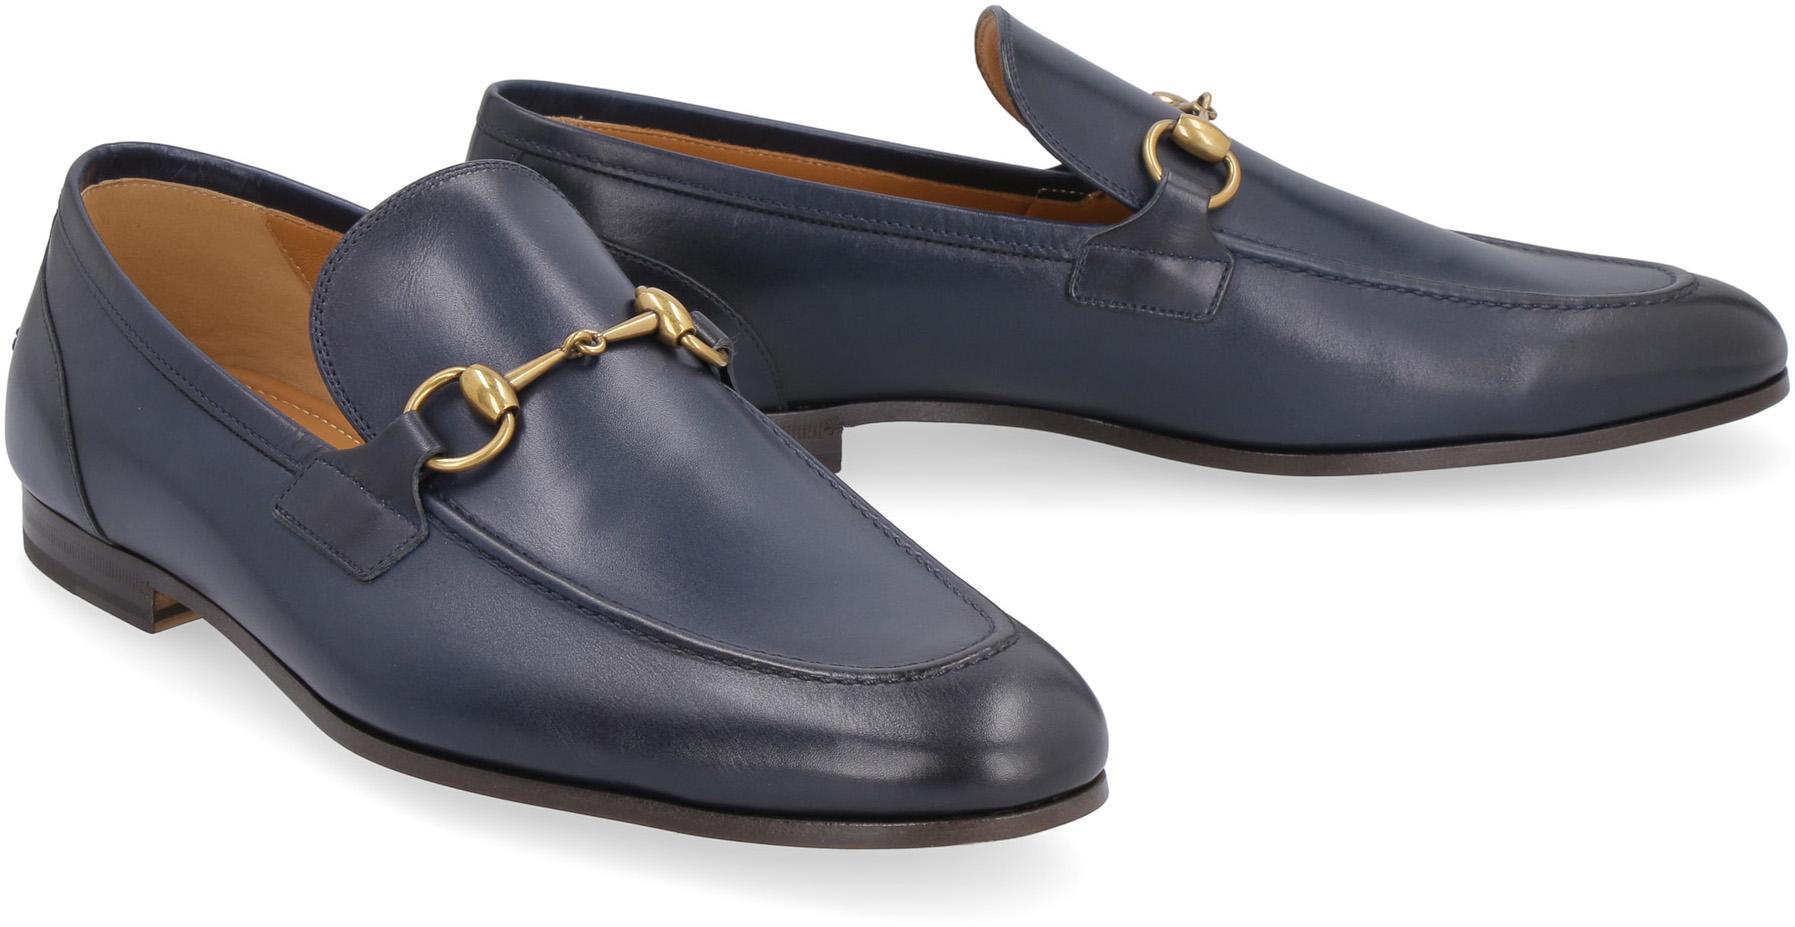 Gucci Jordaan Leather Loafer in Navy (Blue) for Men - Lyst